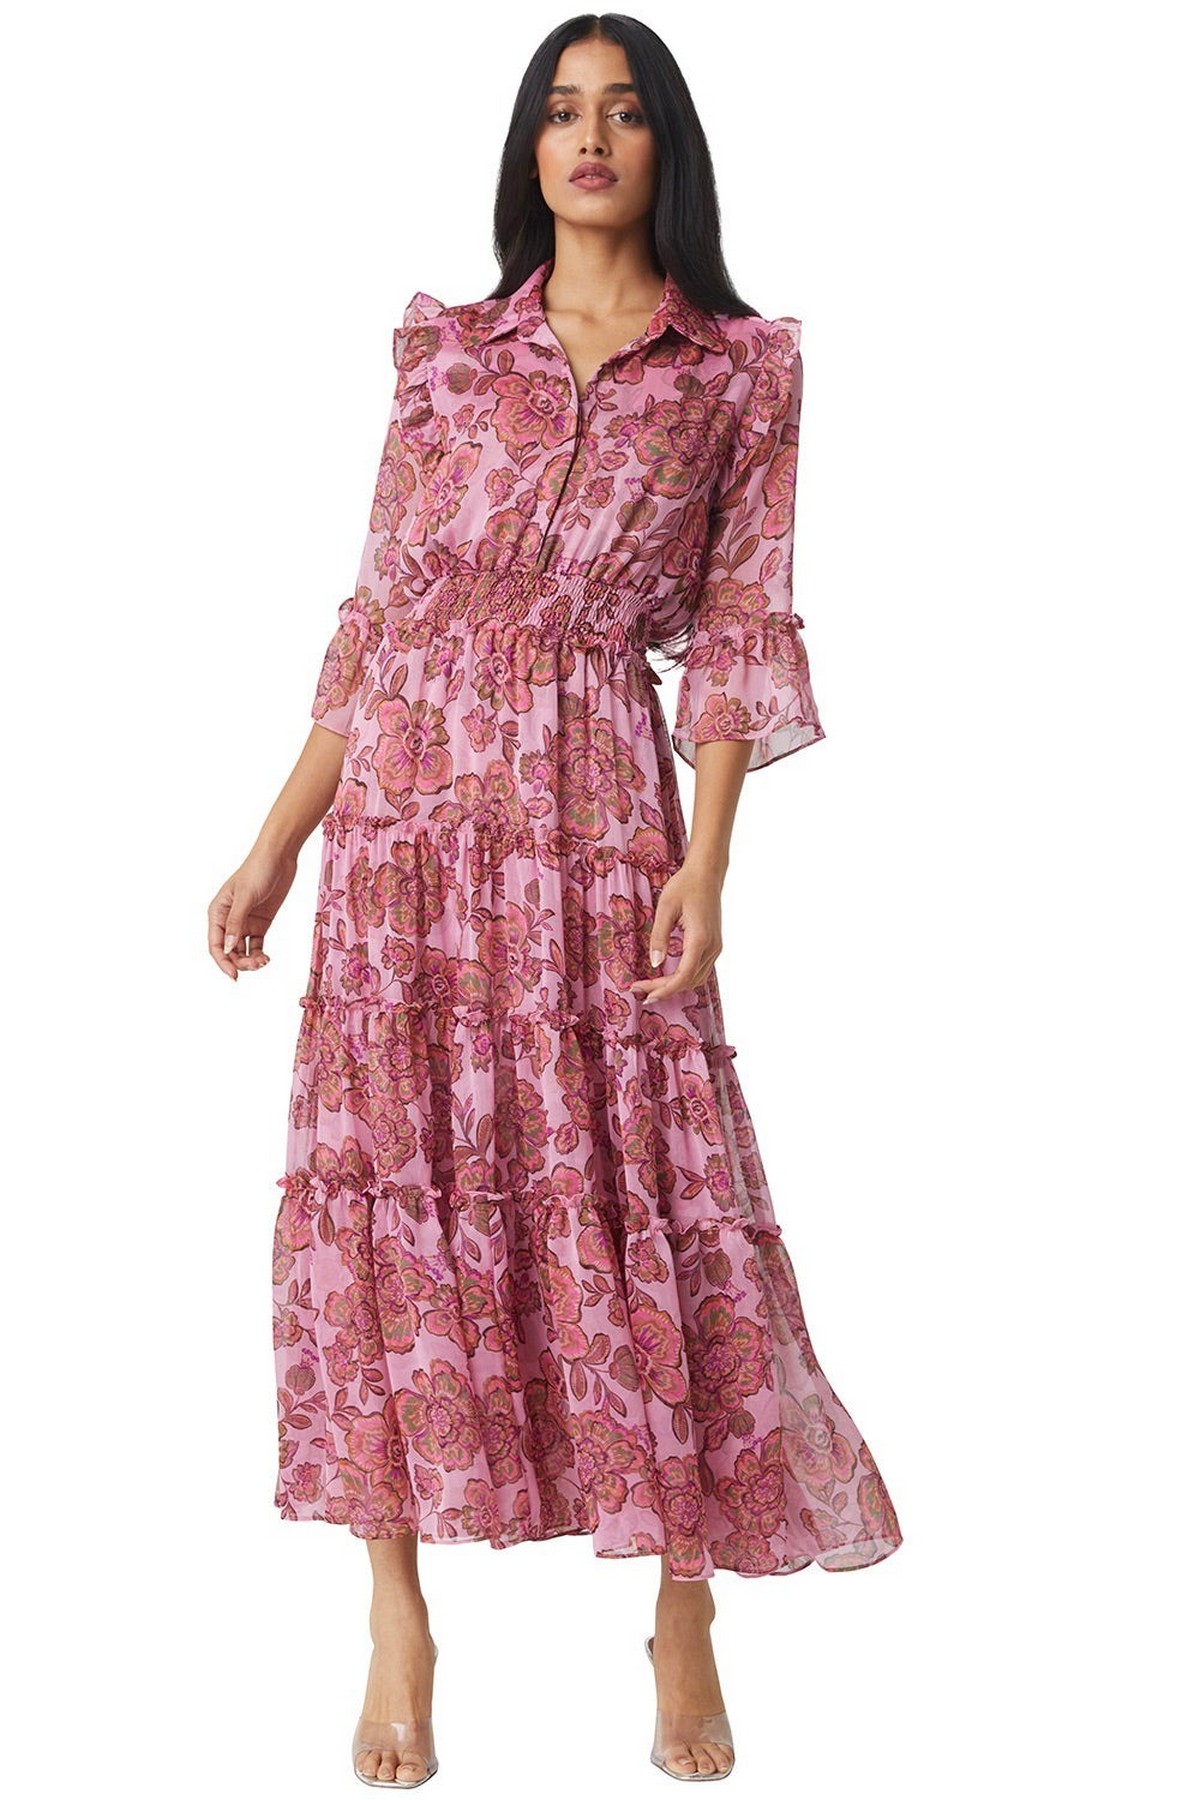 Misa - Pamelina Dress - Kleed lang bloem chiffon zijde roze groen